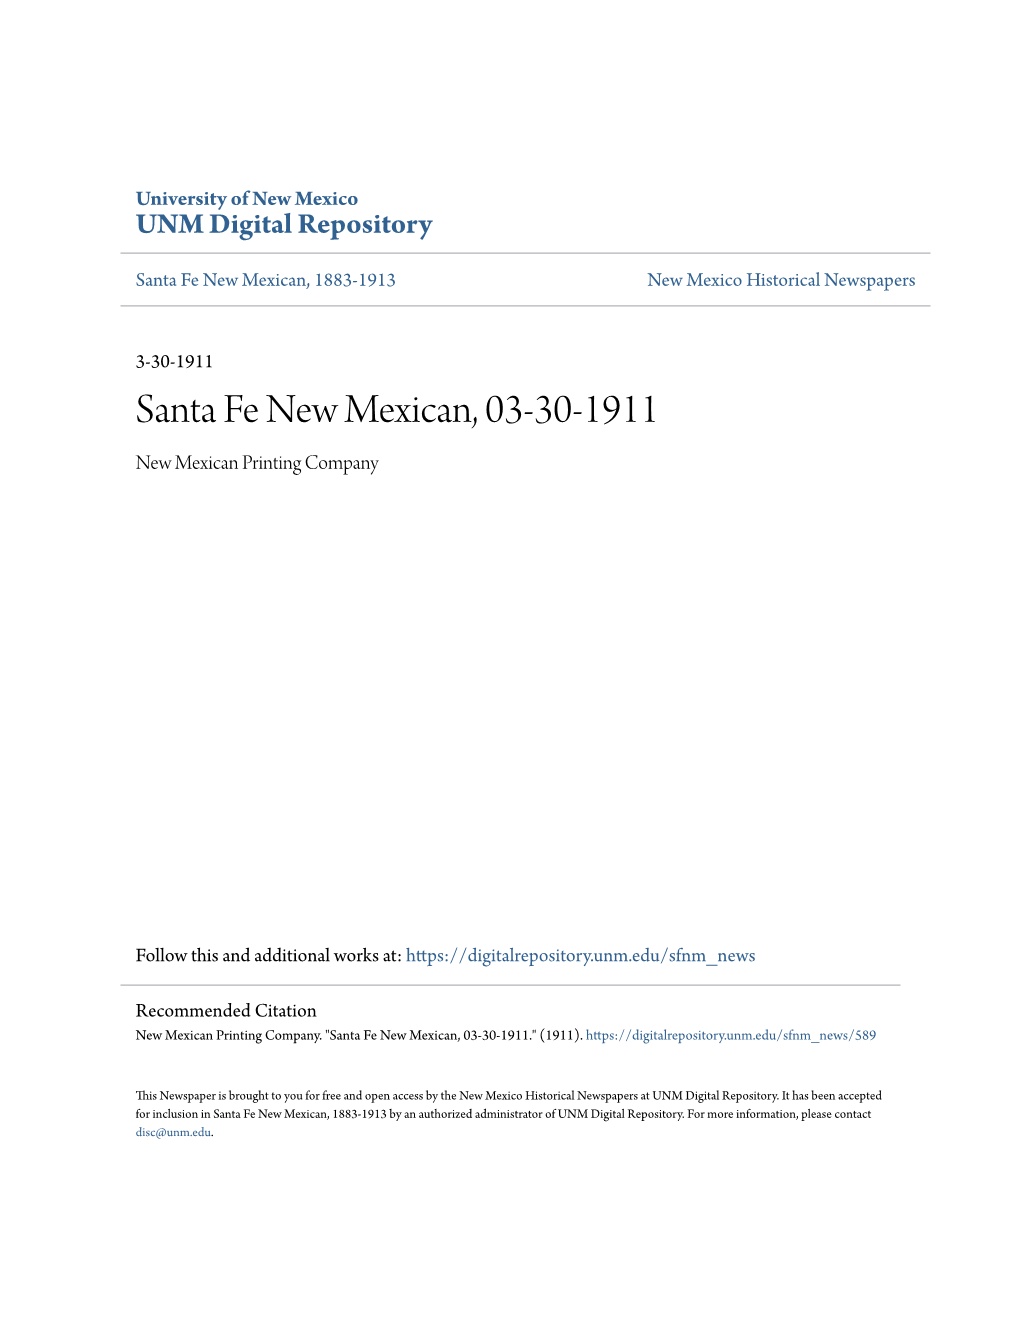 Santa Fe New Mexican, 03-30-1911 New Mexican Printing Company